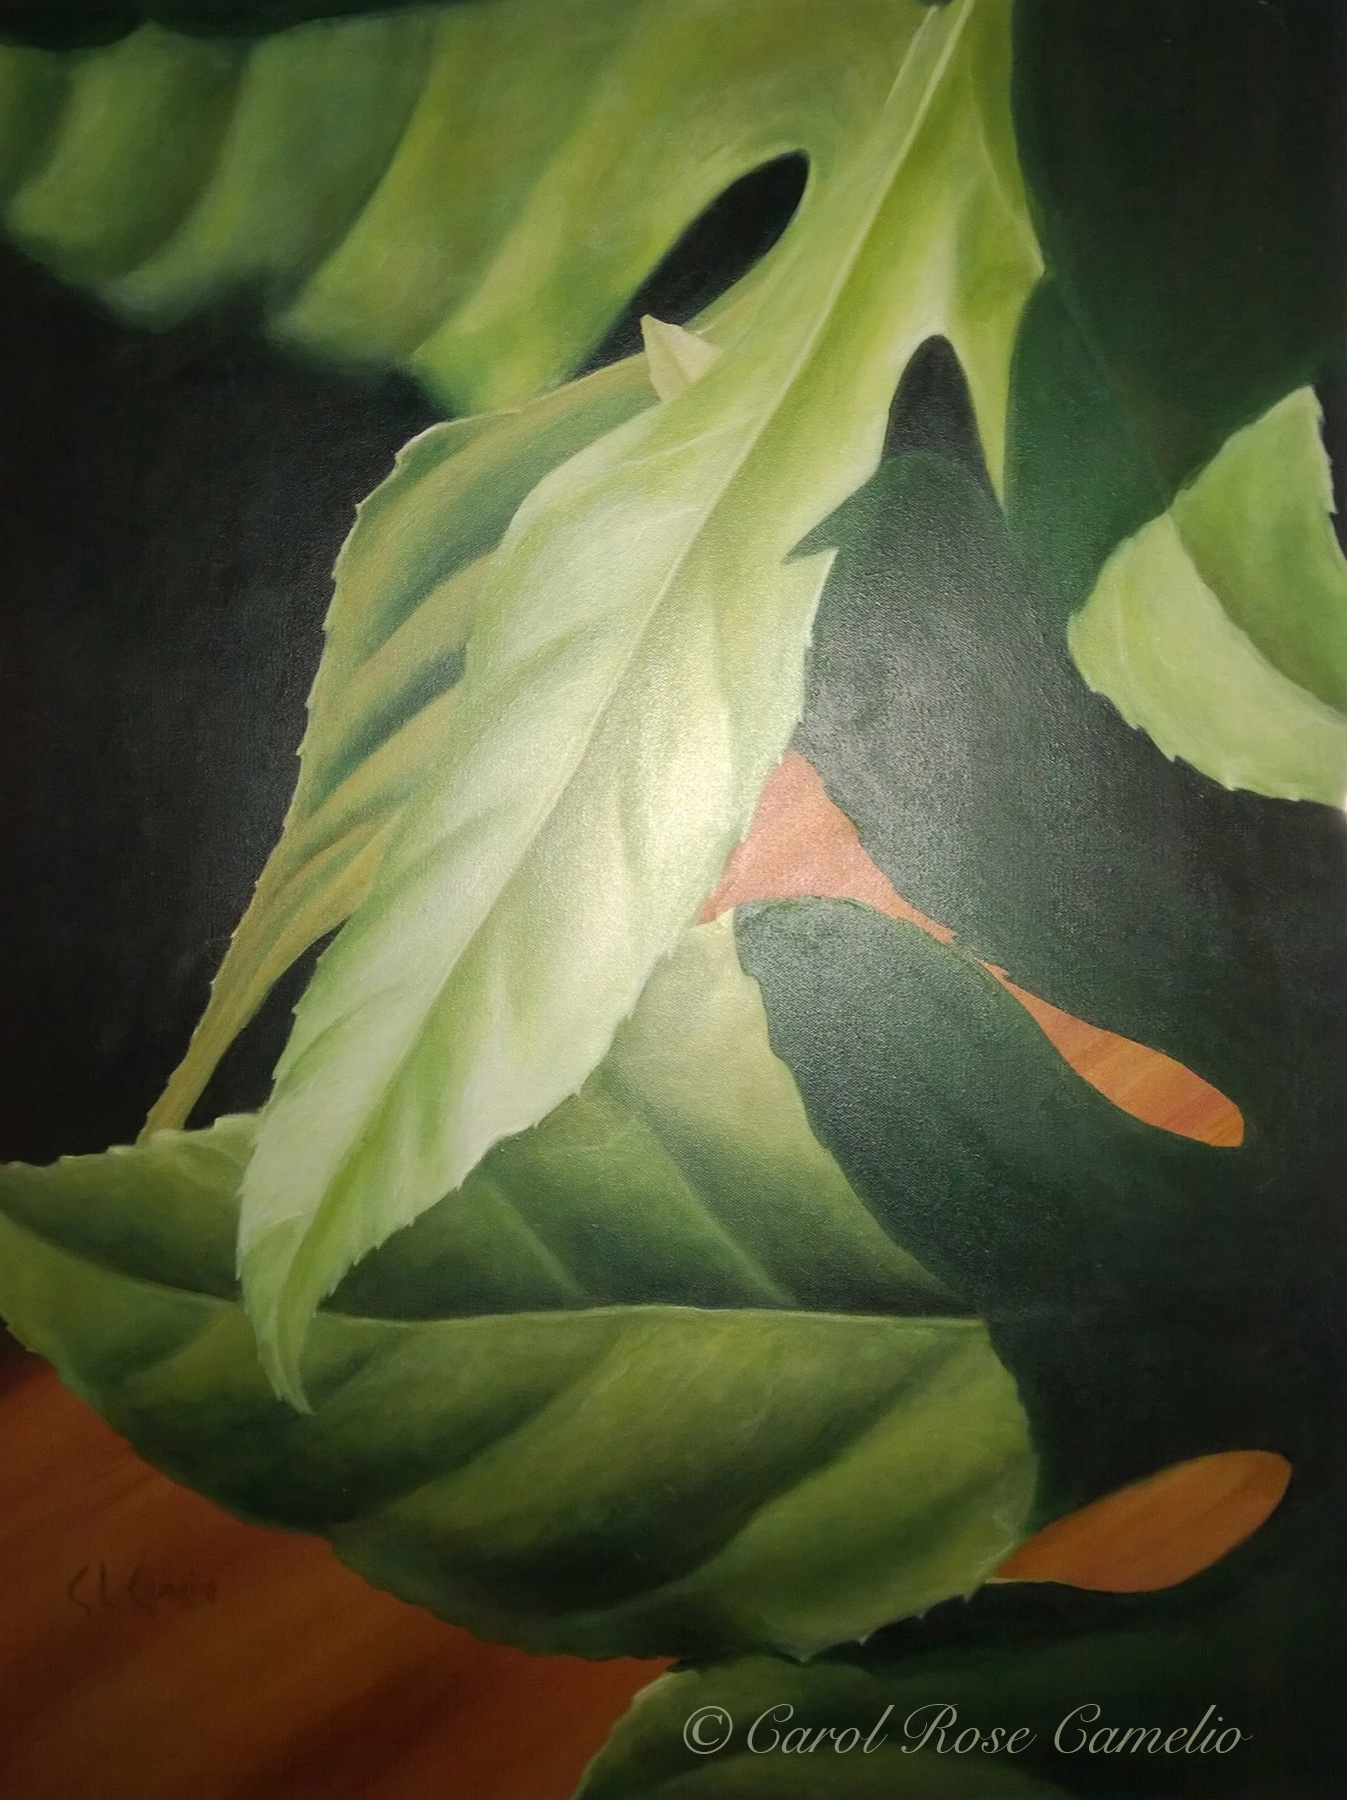 Fatsia II: A closeup of fatsia leaves with strong light and shadow.